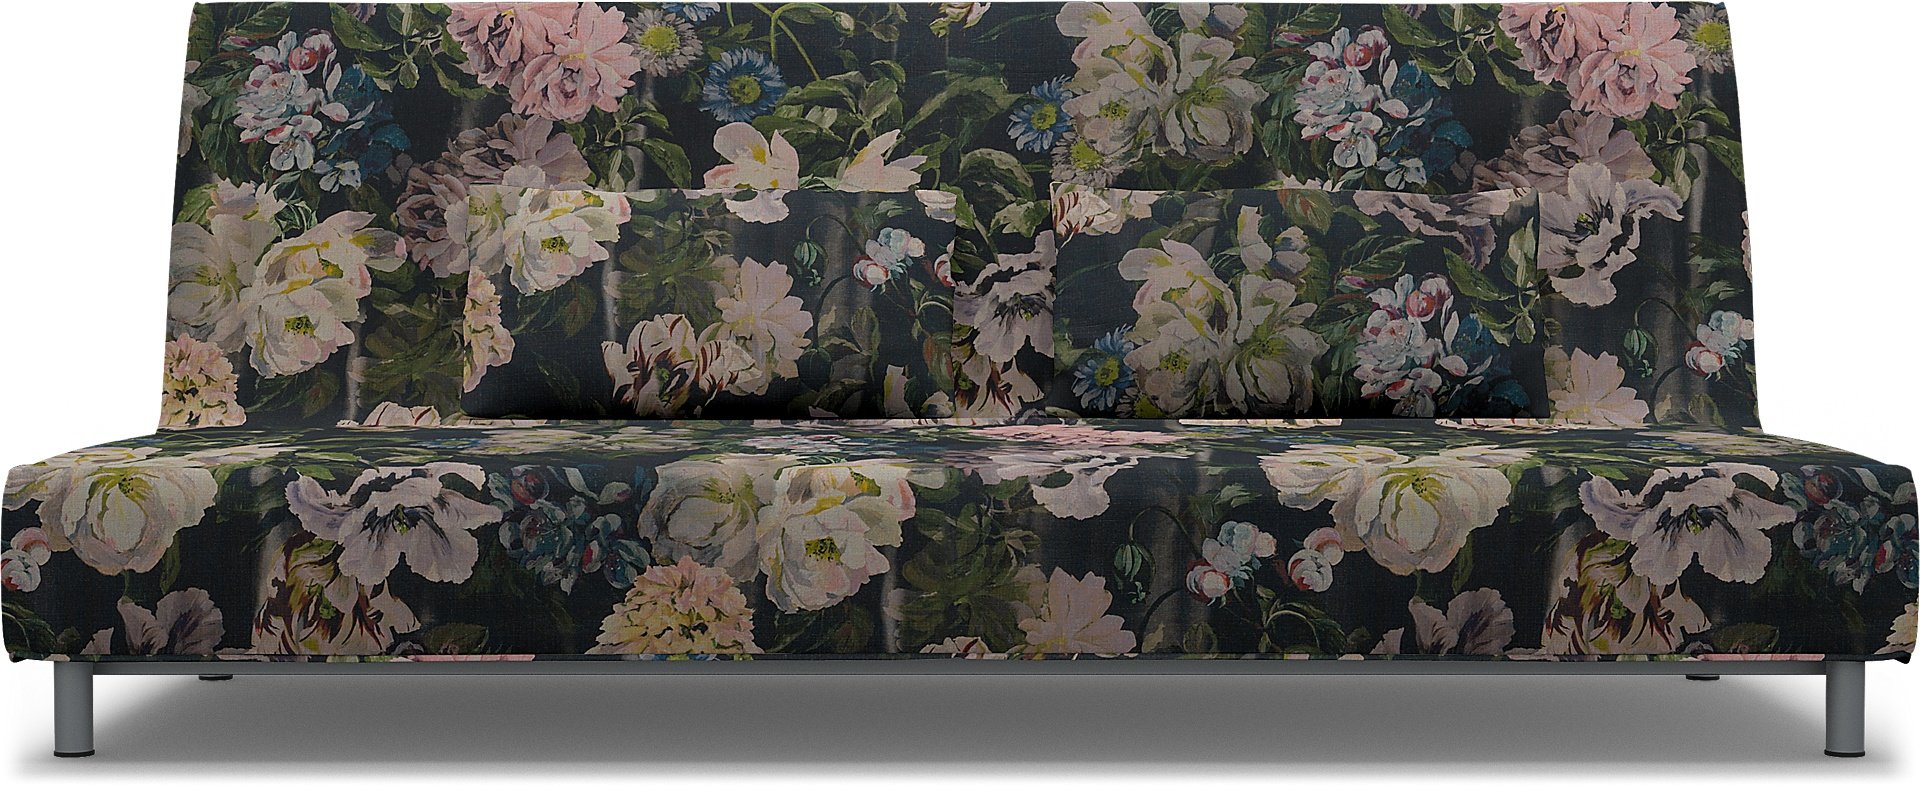 IKEA - Beddinge Sofa Bed Cover, Delft Flower - Graphite, Linen - Bemz